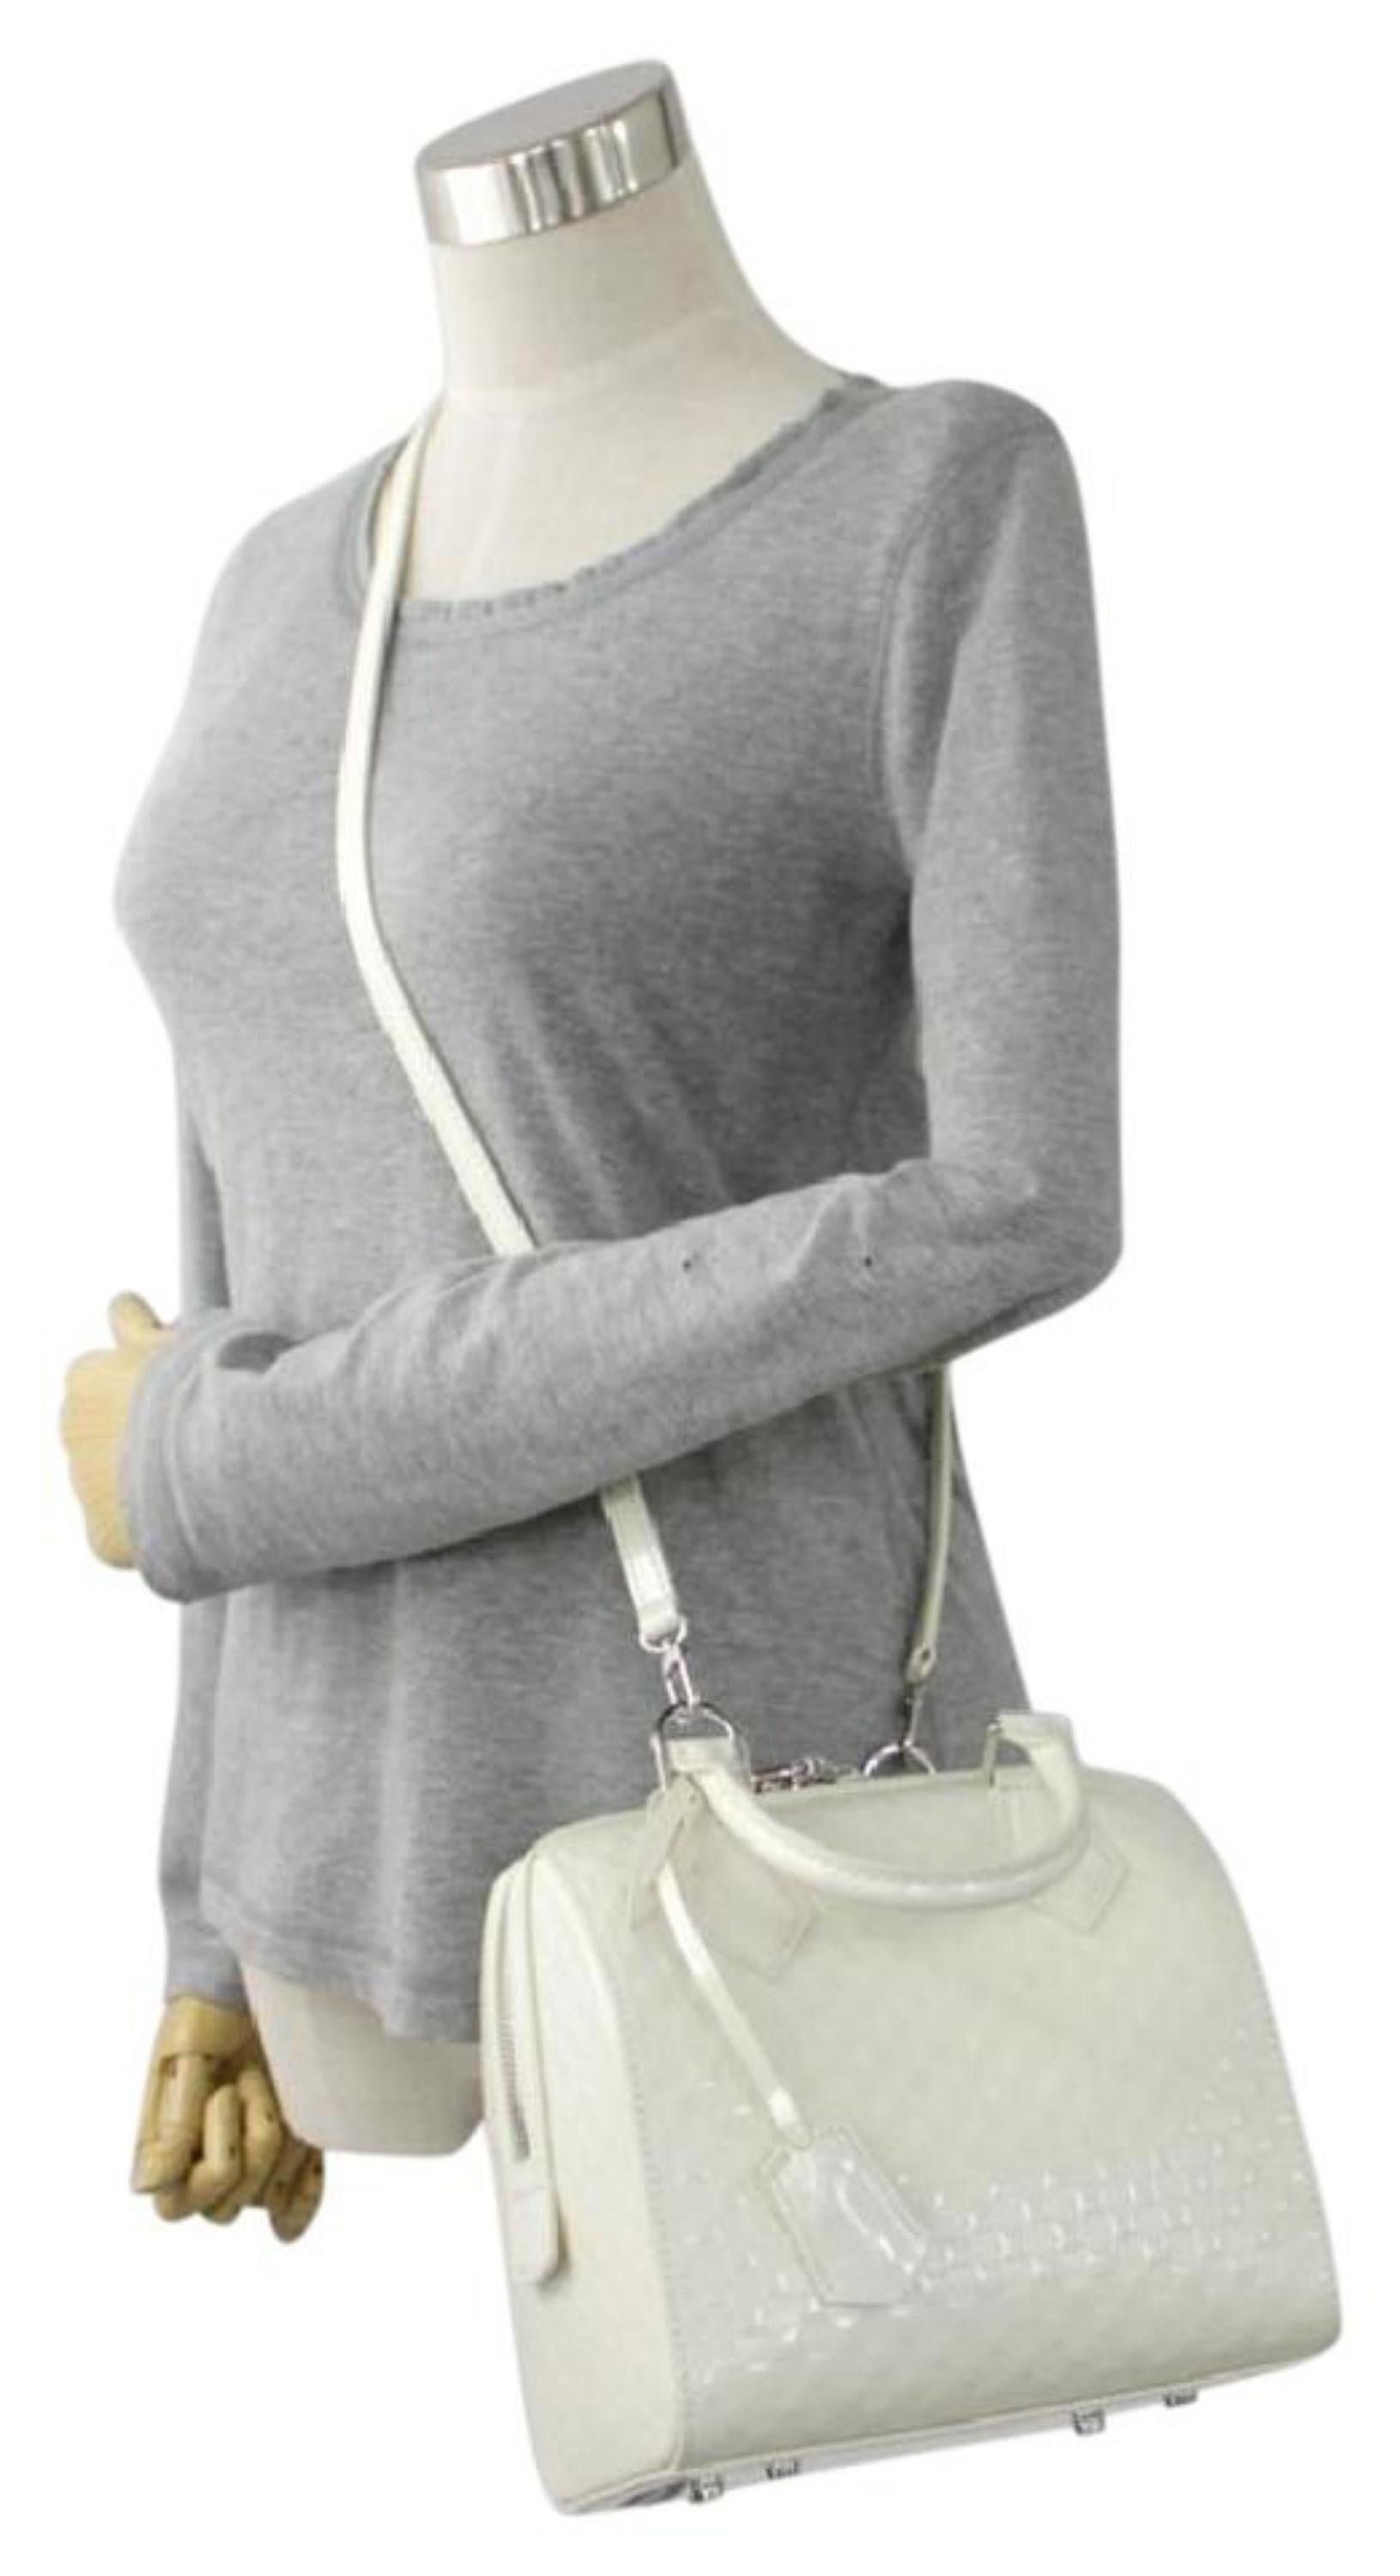 Louis Vuitton Speedy Damier Facette Pm 222152 Patent Leather Cross Body Bag For Sale 5